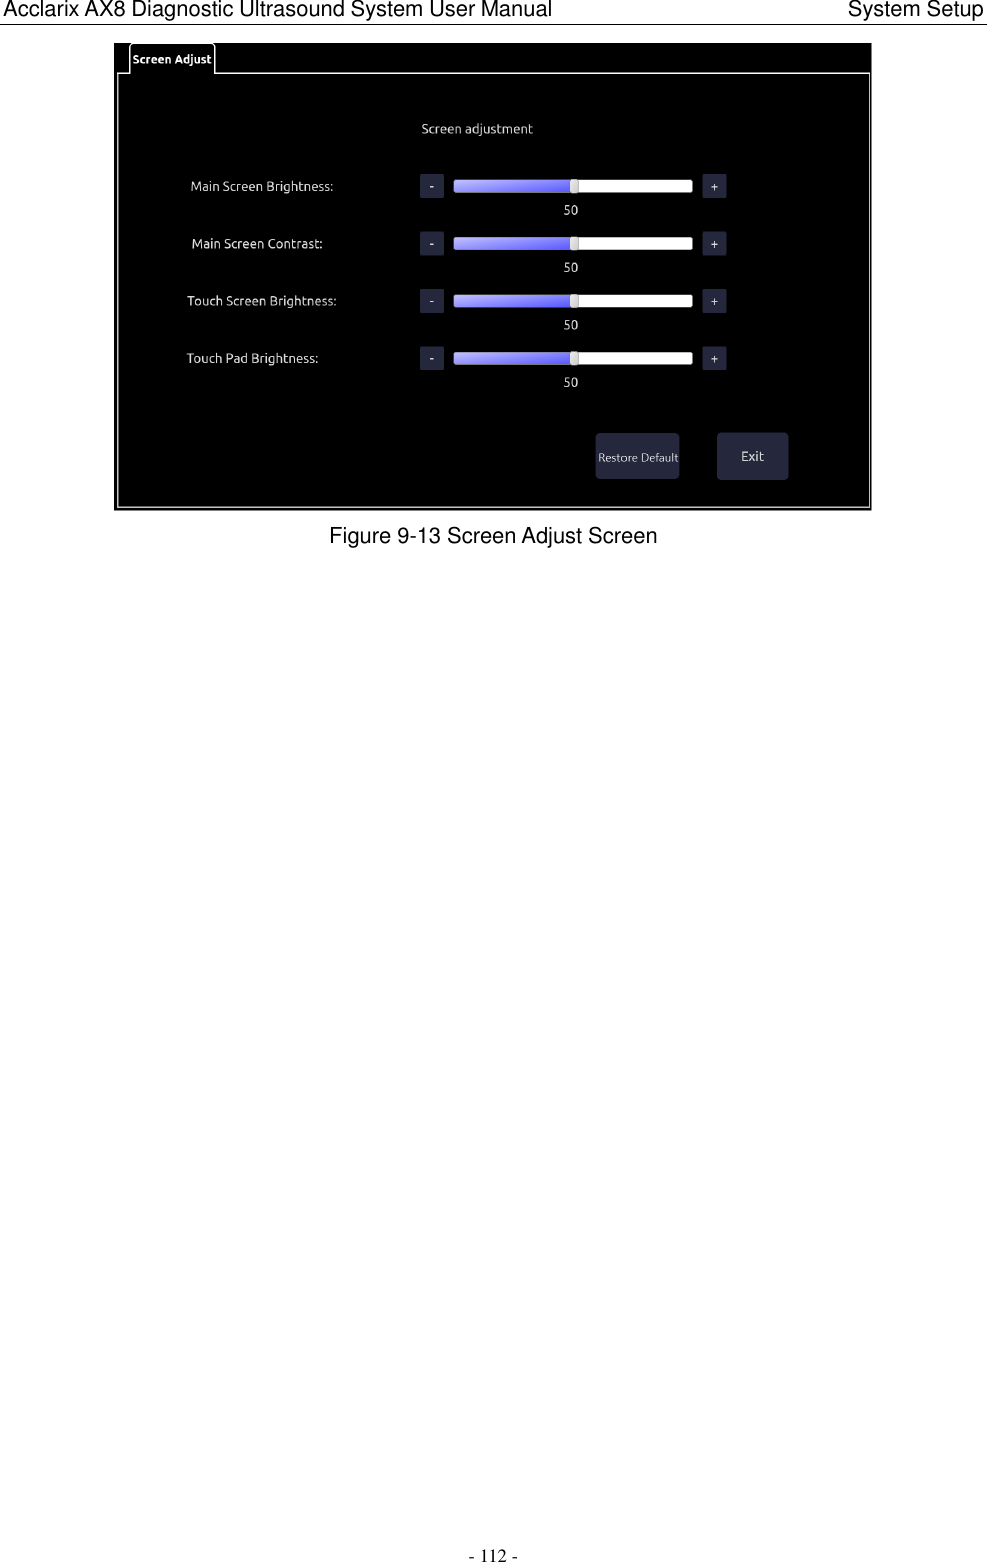 Acclarix AX8 Diagnostic Ultrasound System User Manual                                                      System Setup - 112 -  Figure 9-13 Screen Adjust Screen